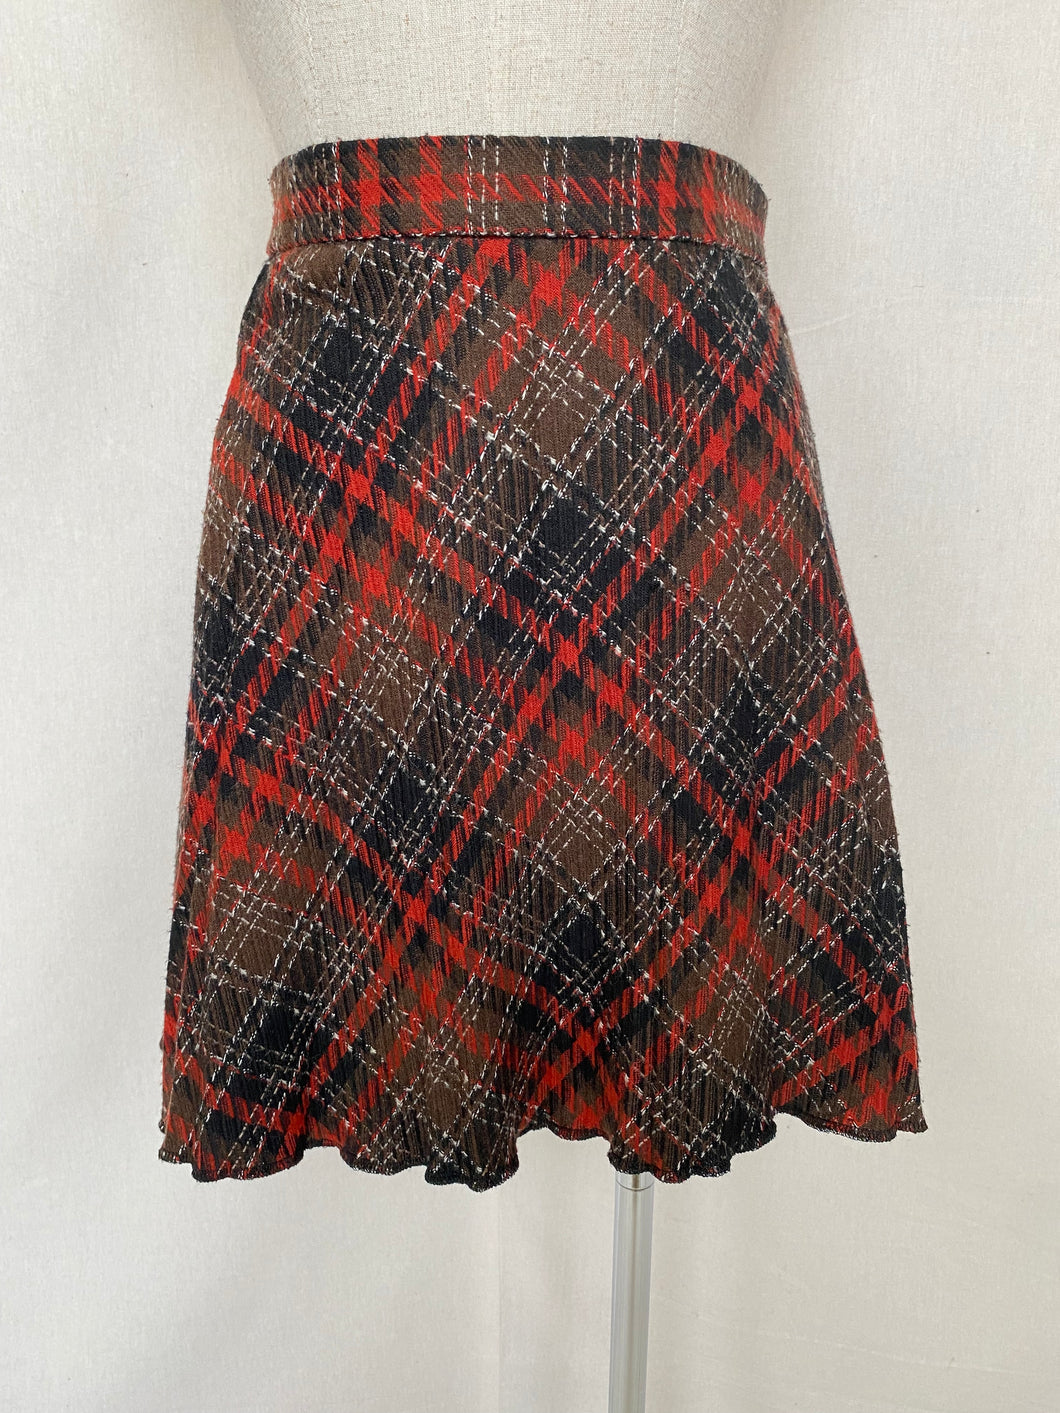 Aldworth skirt: Size 8